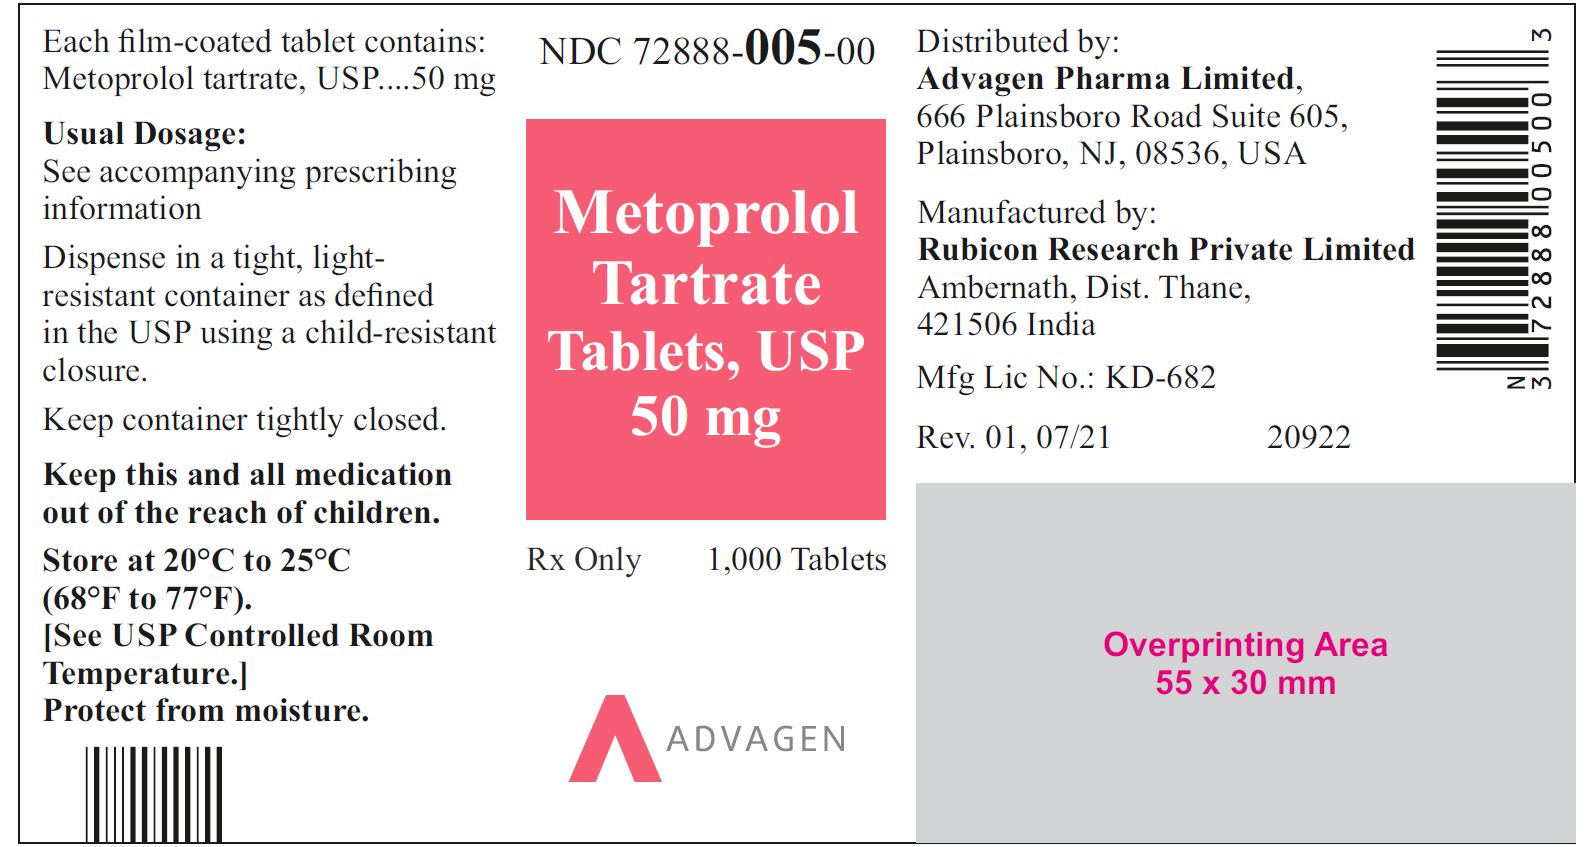 NDC: <a href=/NDC/72888-005-00>72888-005-00</a> - Metoprolol Tartrate Tablets, USP 50 mg - 1000 Tablets